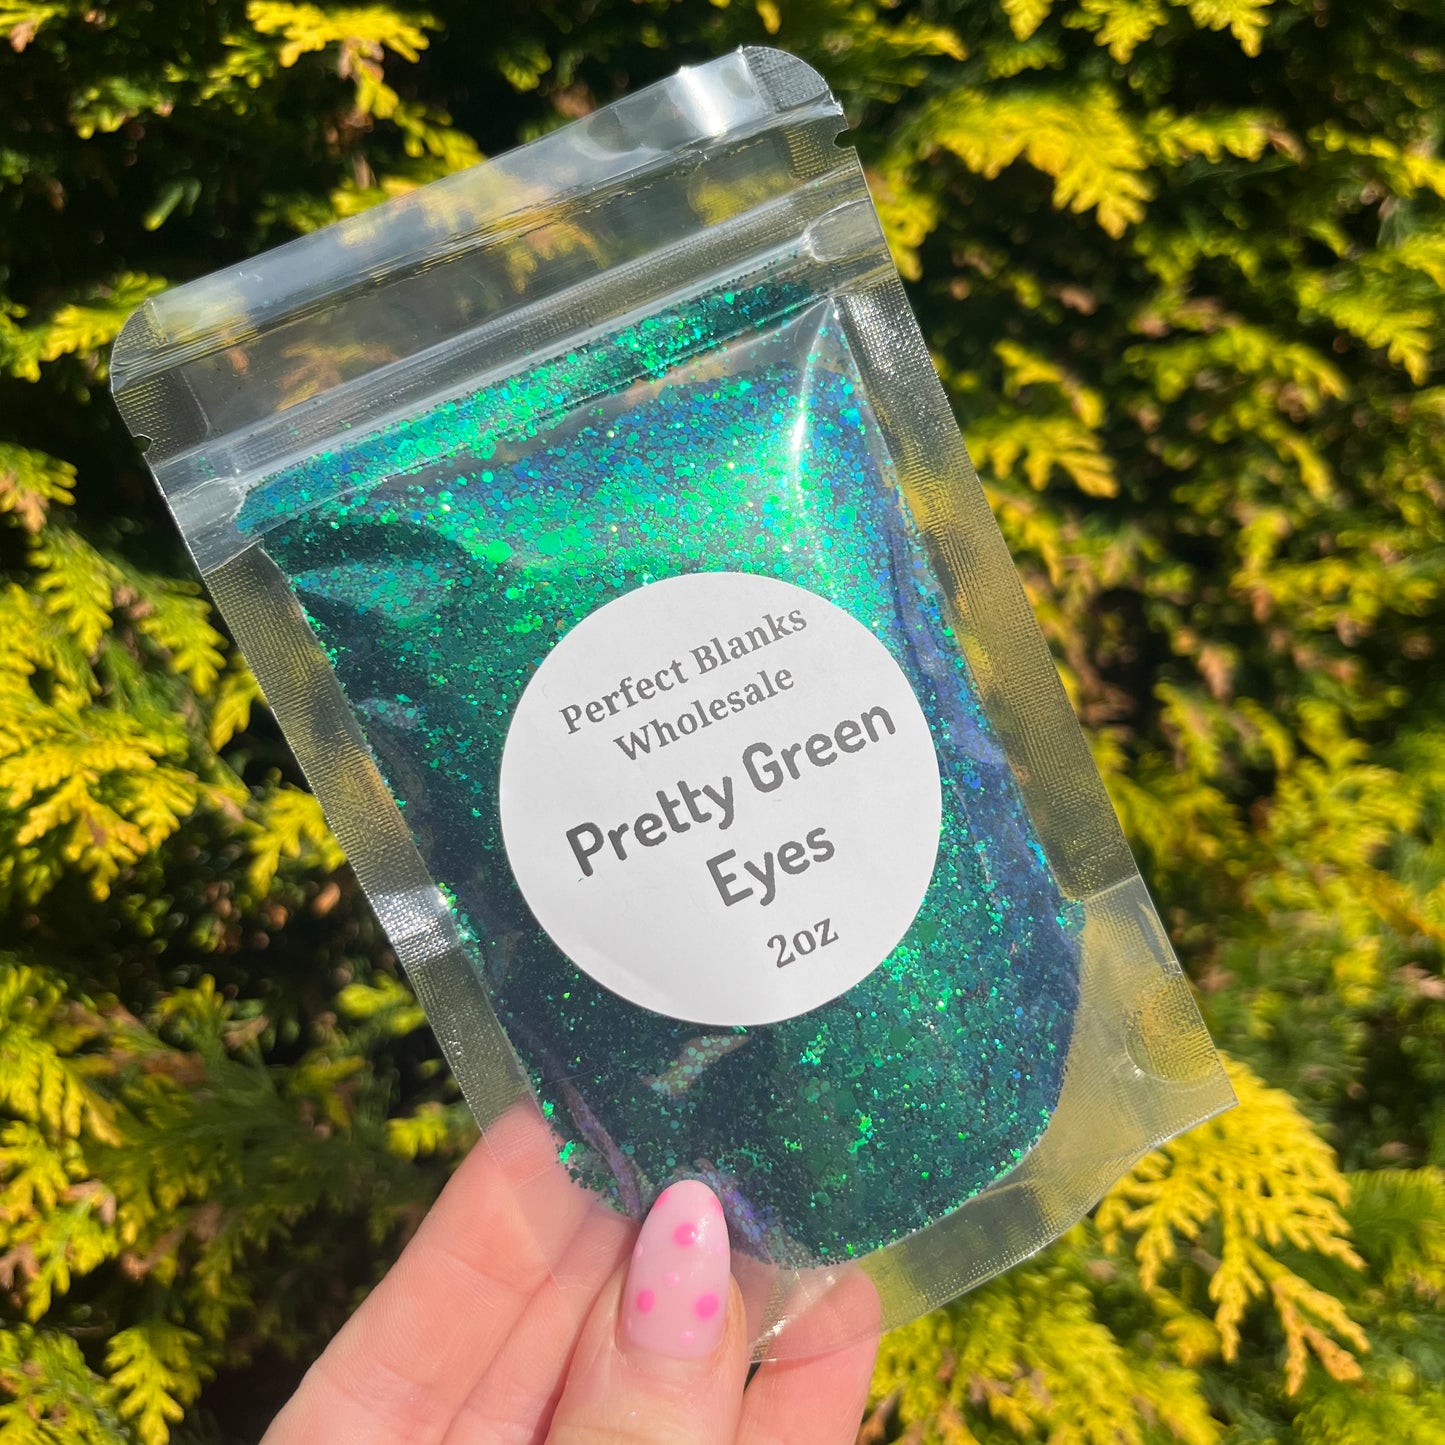 Pretty Green Eyes - Chunky Glitter